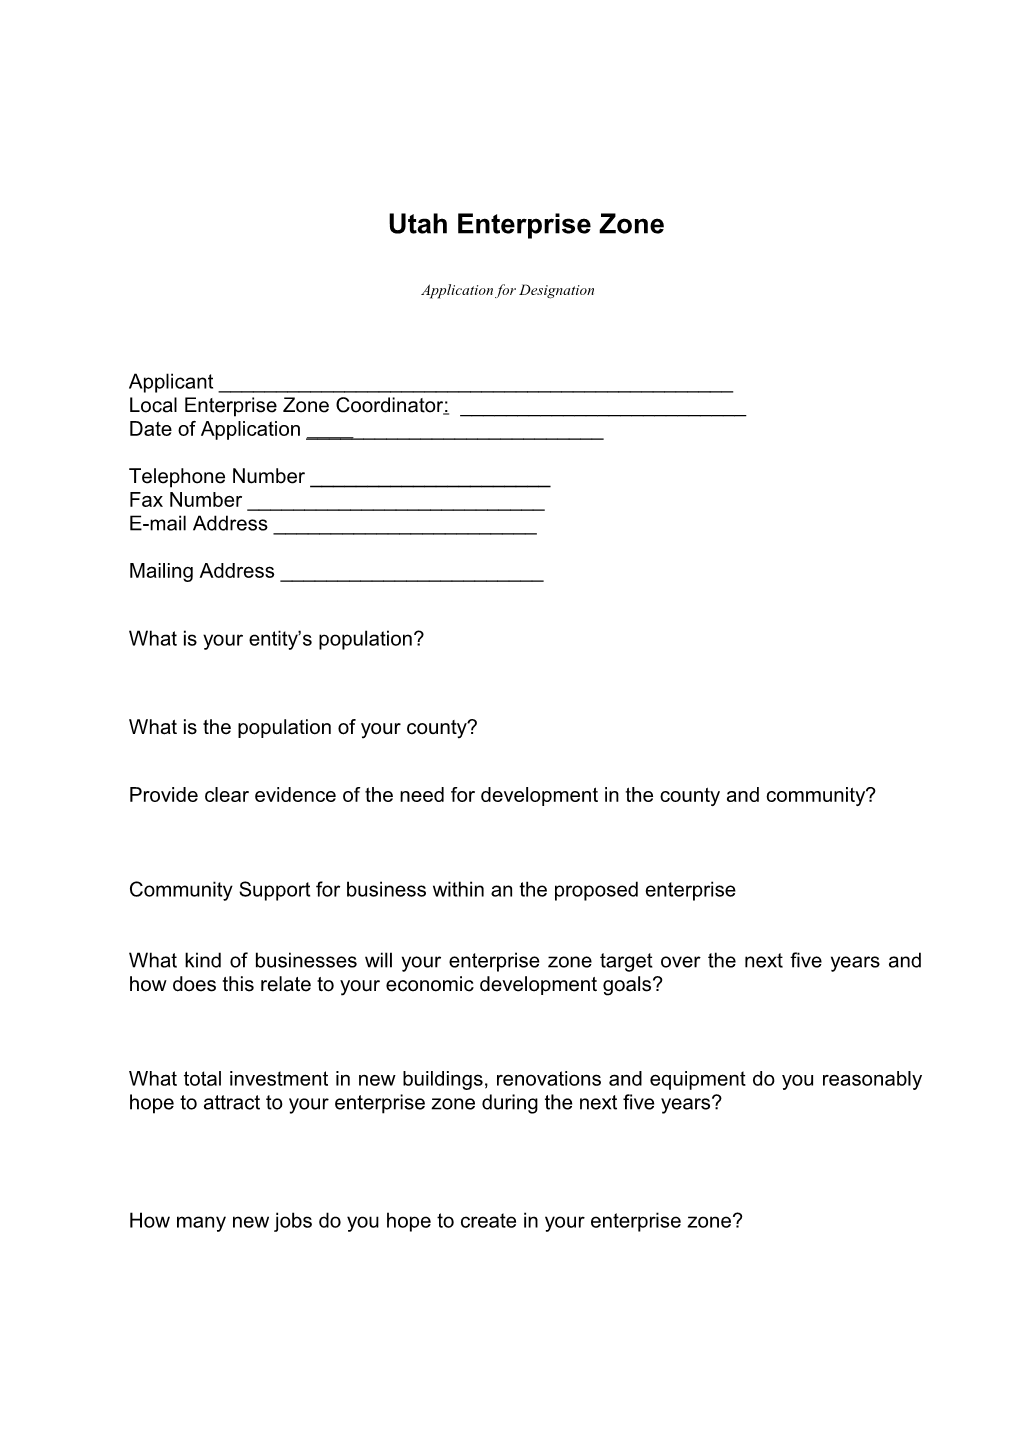 Utah Enterprise Zone